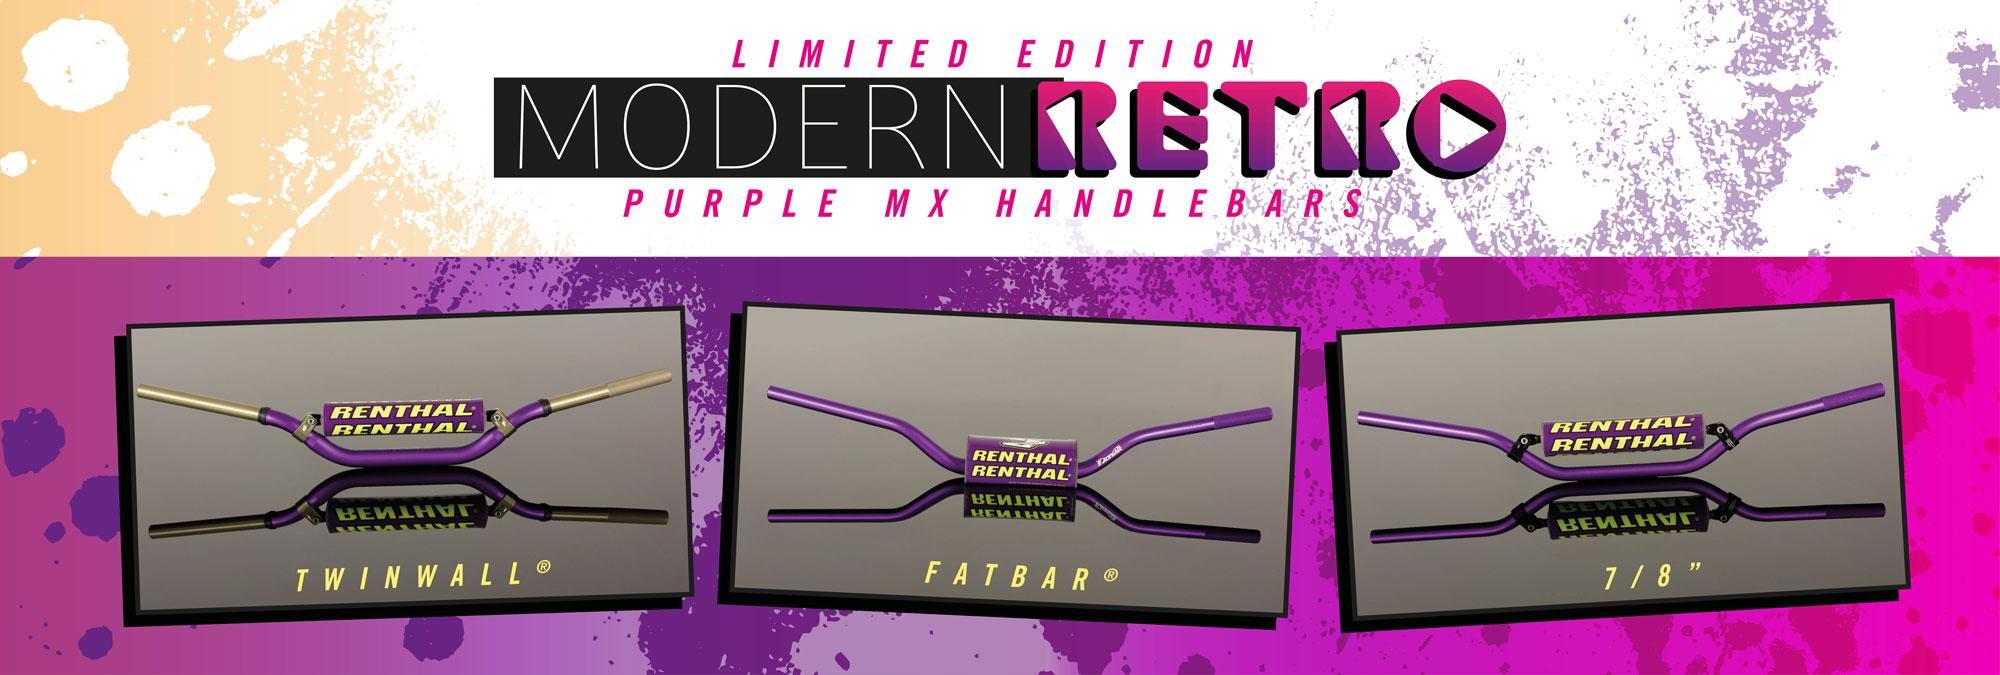 Limited Edition - Modern Retro Purple MX Handlebars